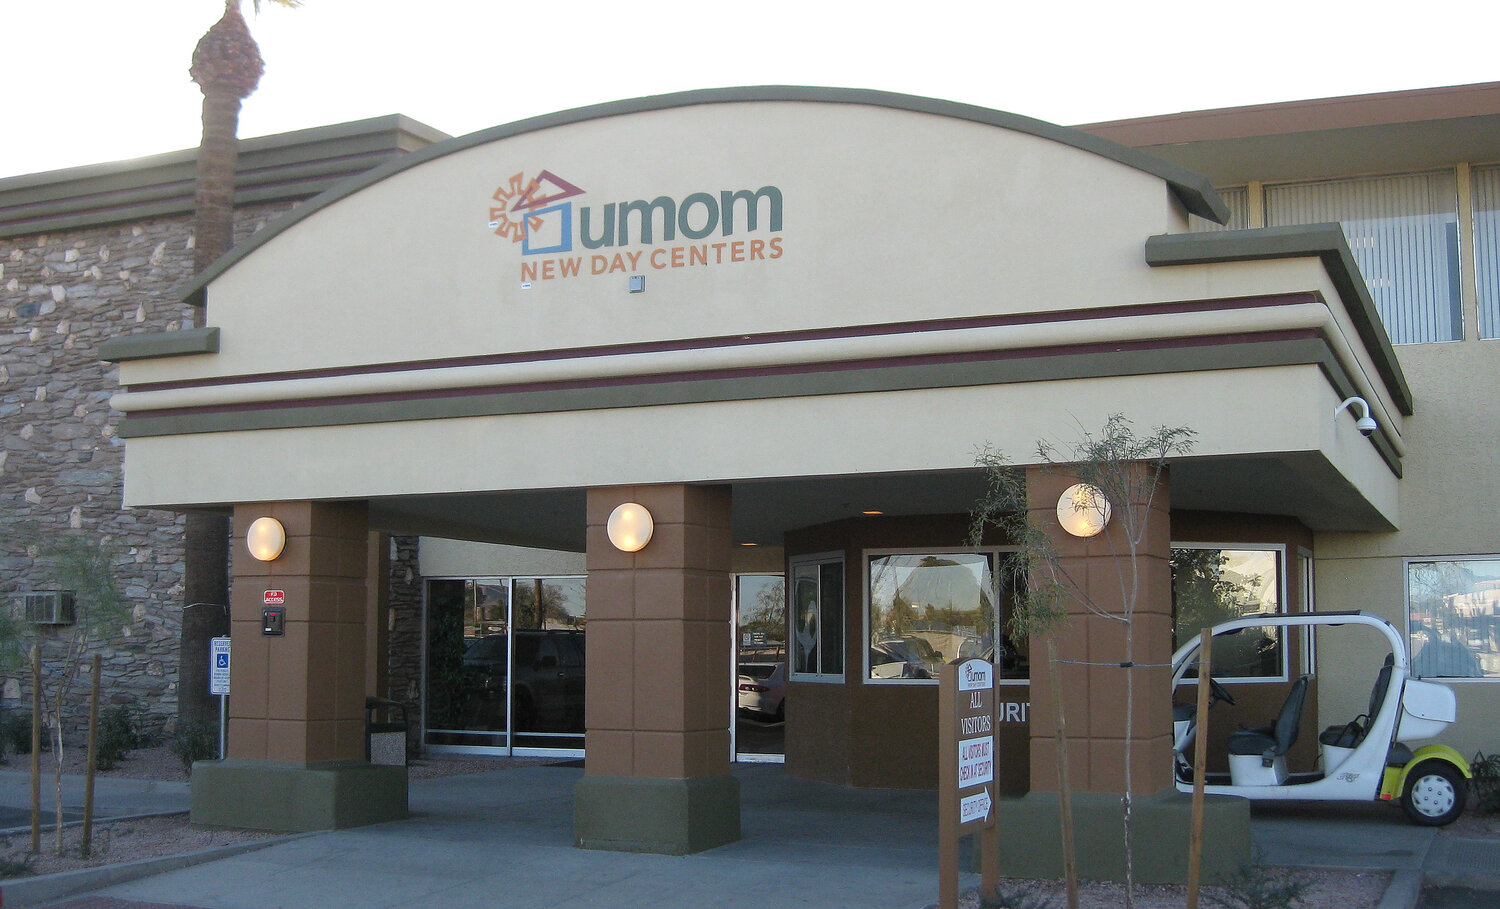 UMOM New Day Centers is located at 3333 E. Van Buren St., in Phoenix.